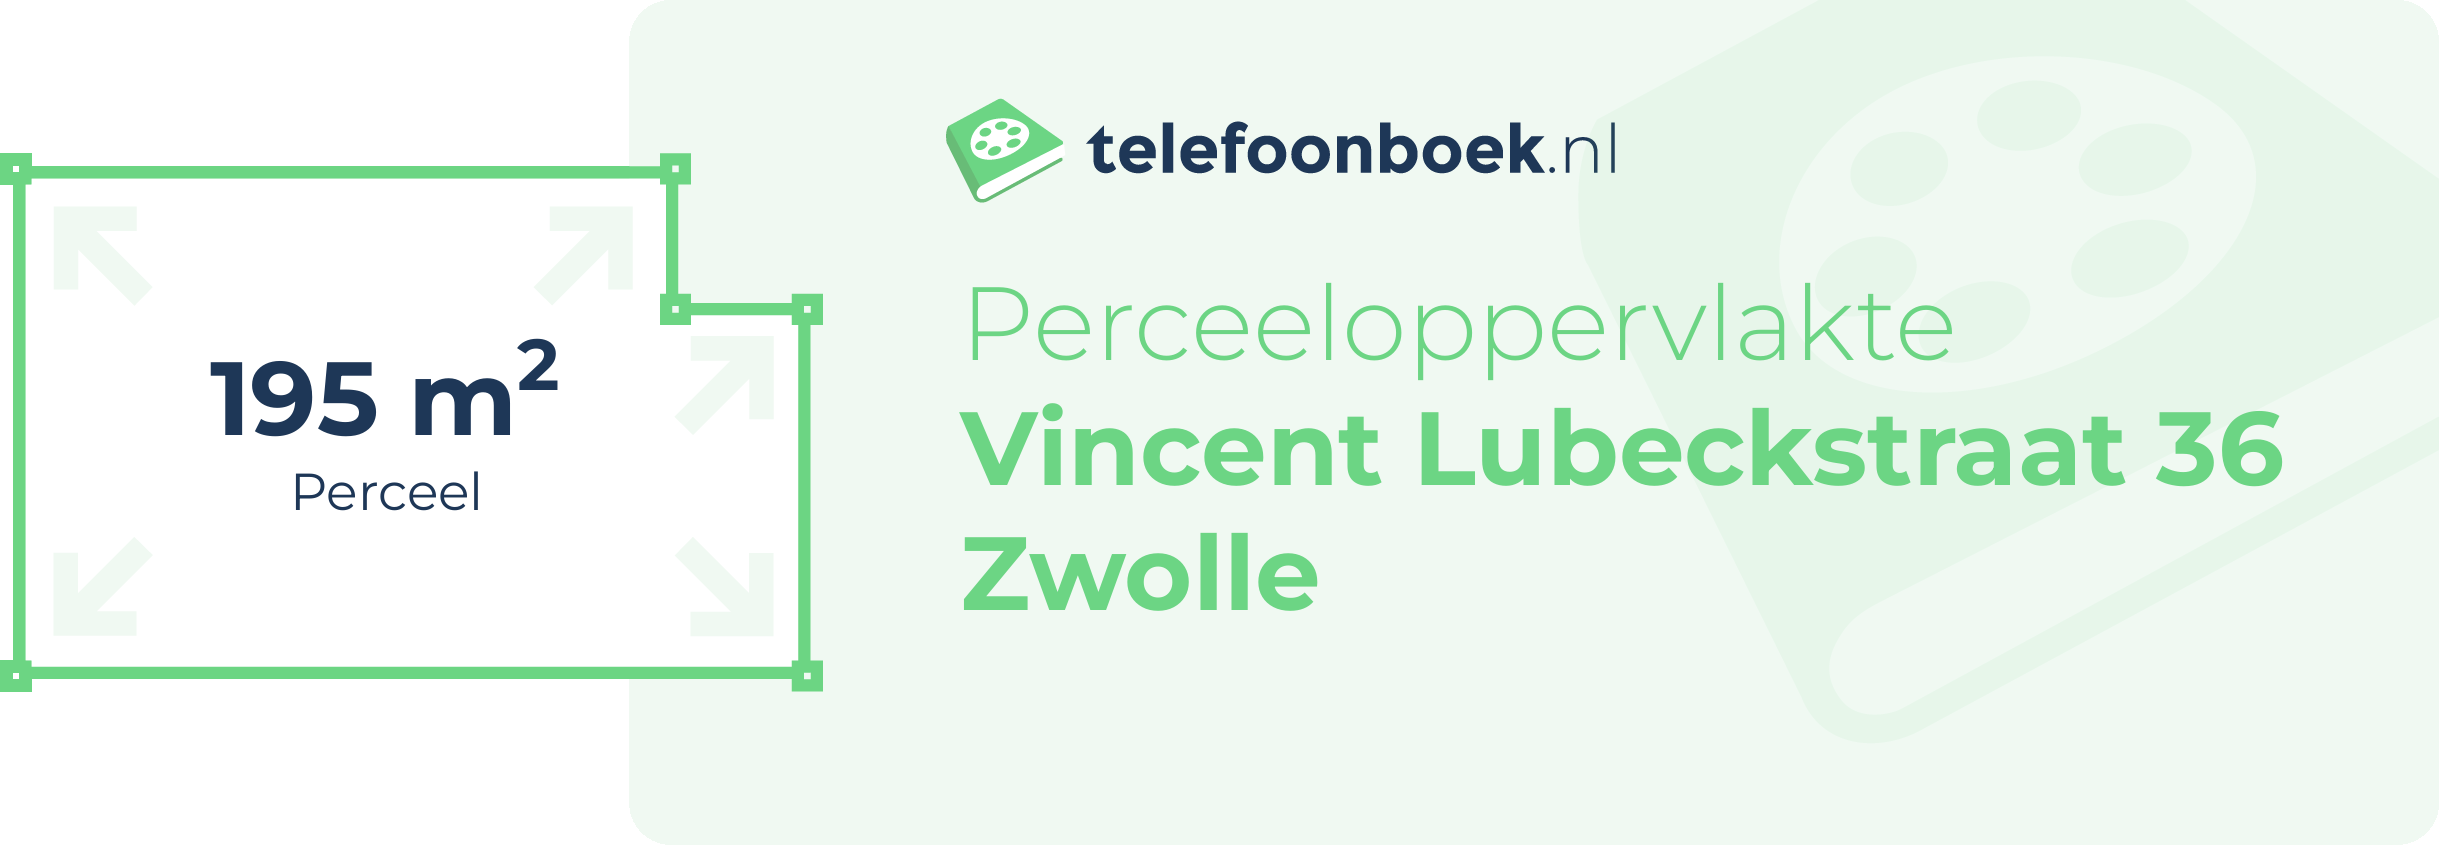 Perceeloppervlakte Vincent Lubeckstraat 36 Zwolle